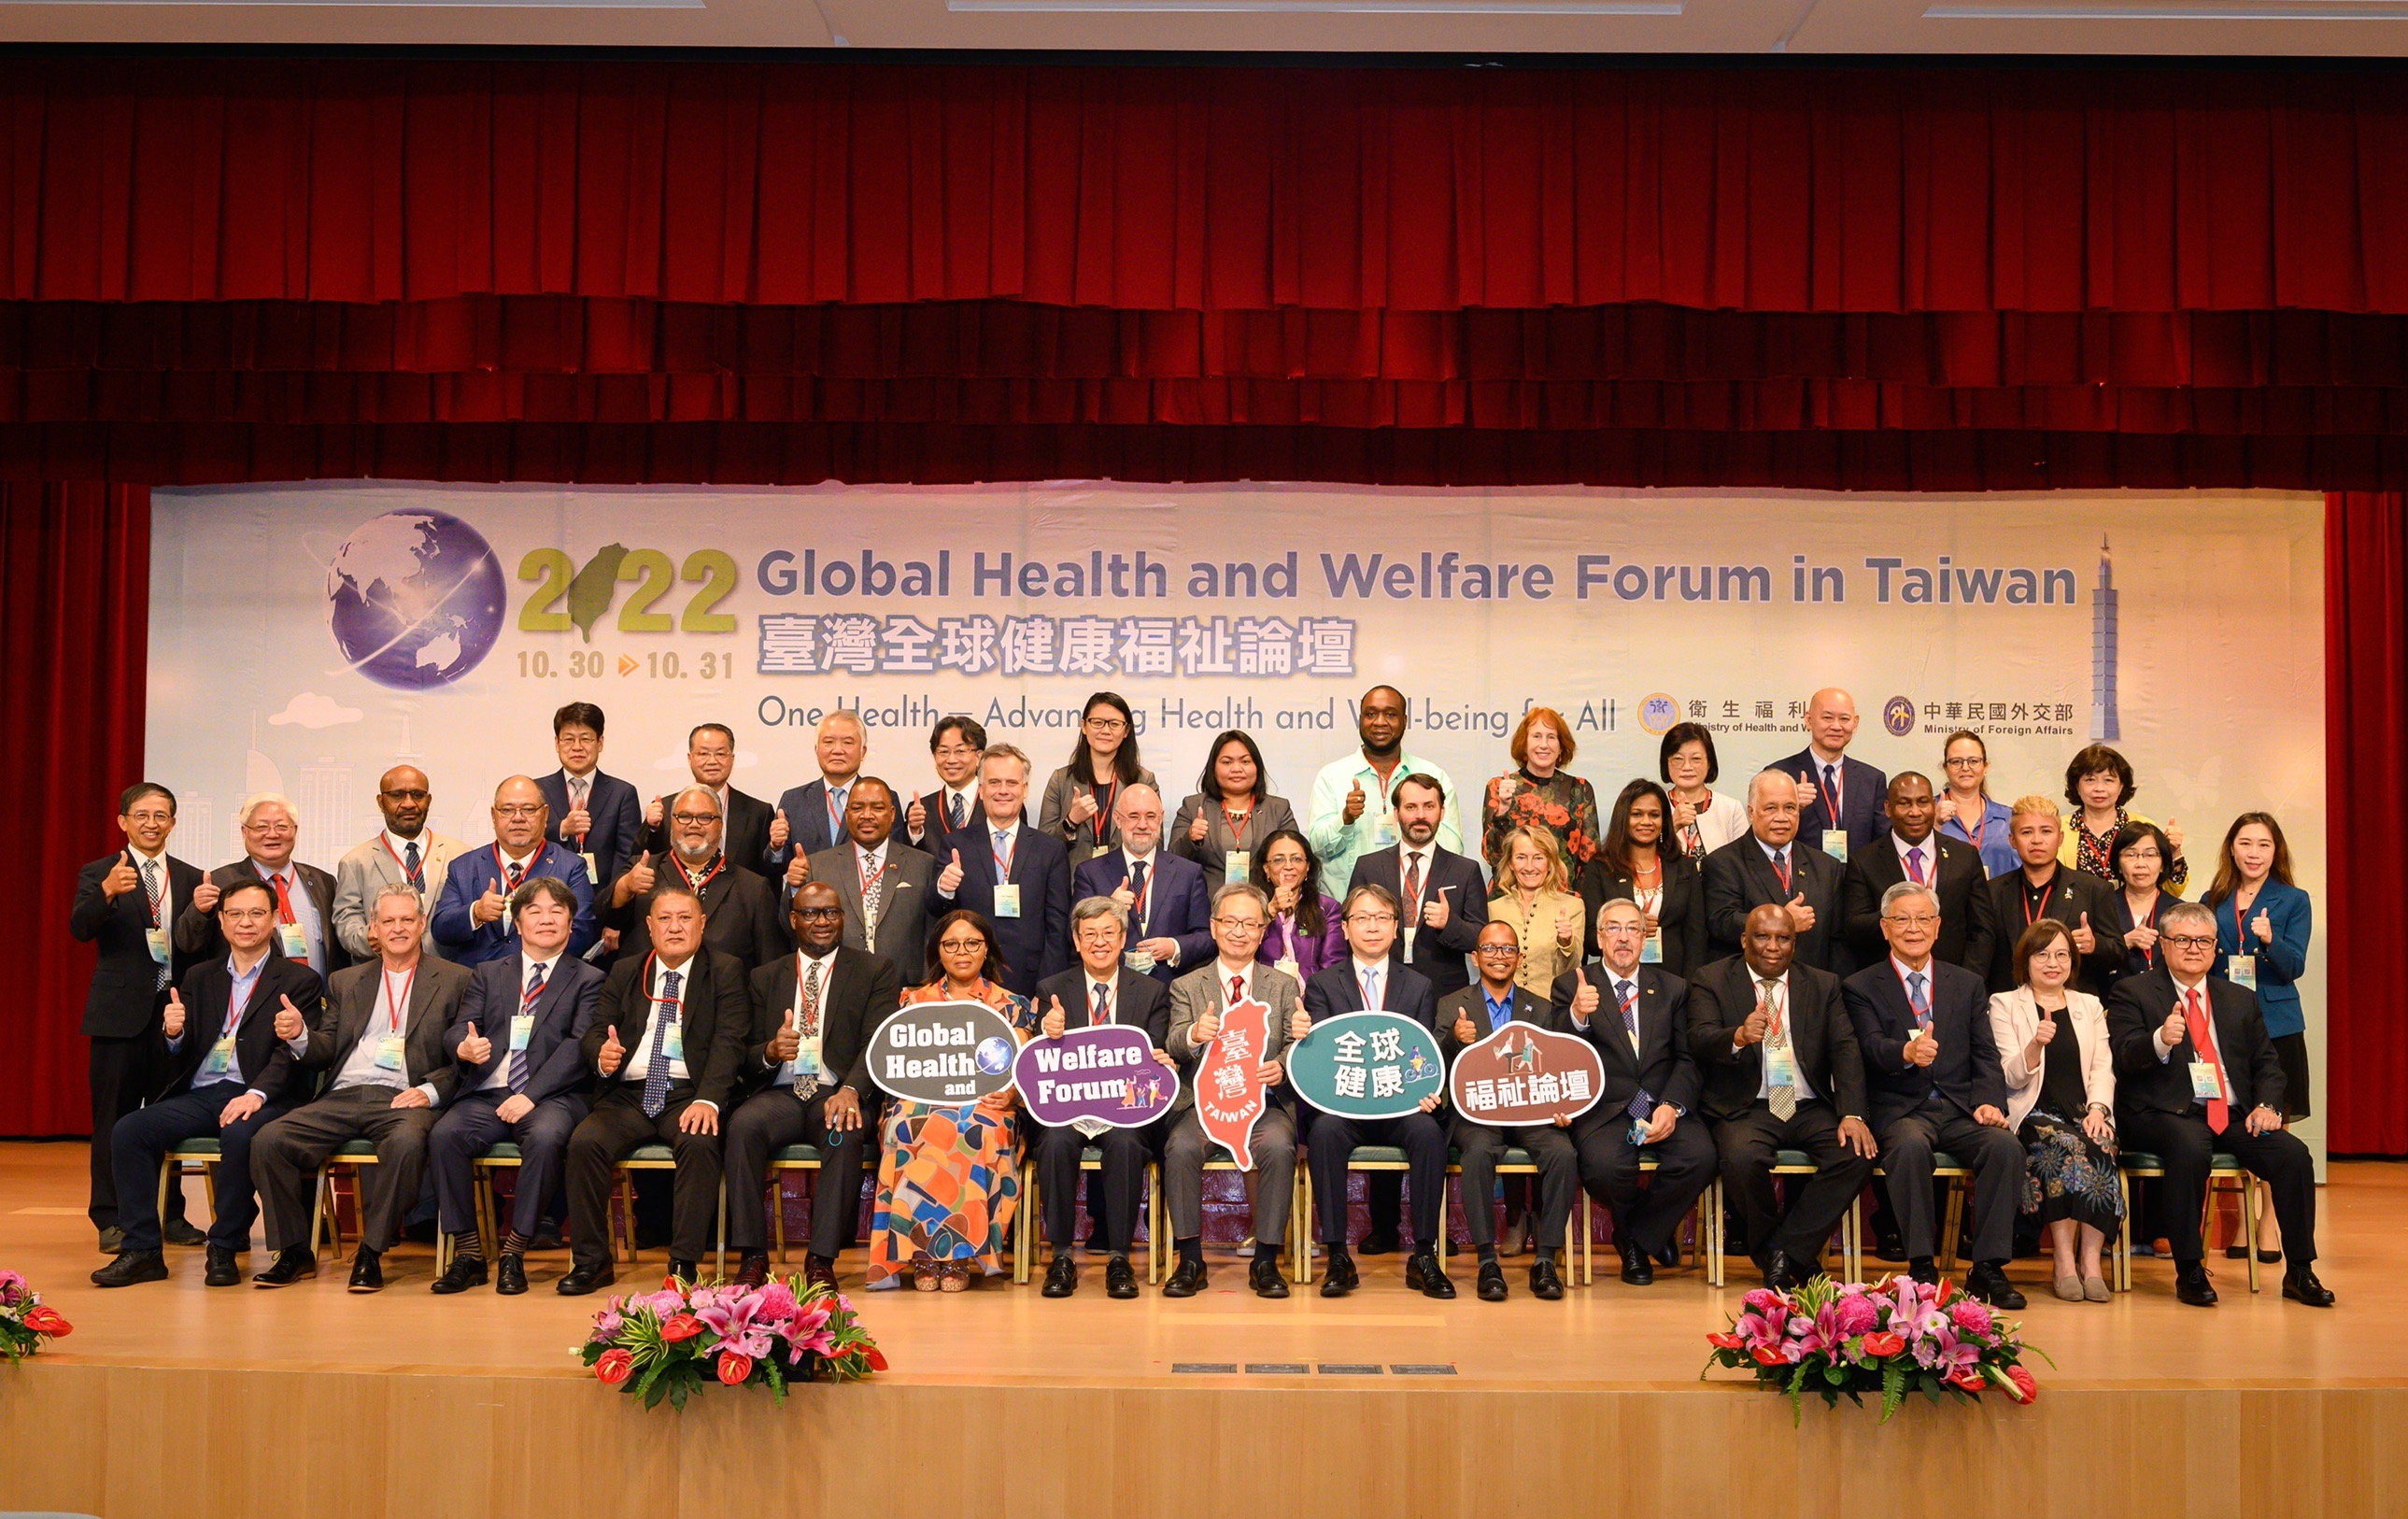 The 2022 Global Health and Welfare Forum